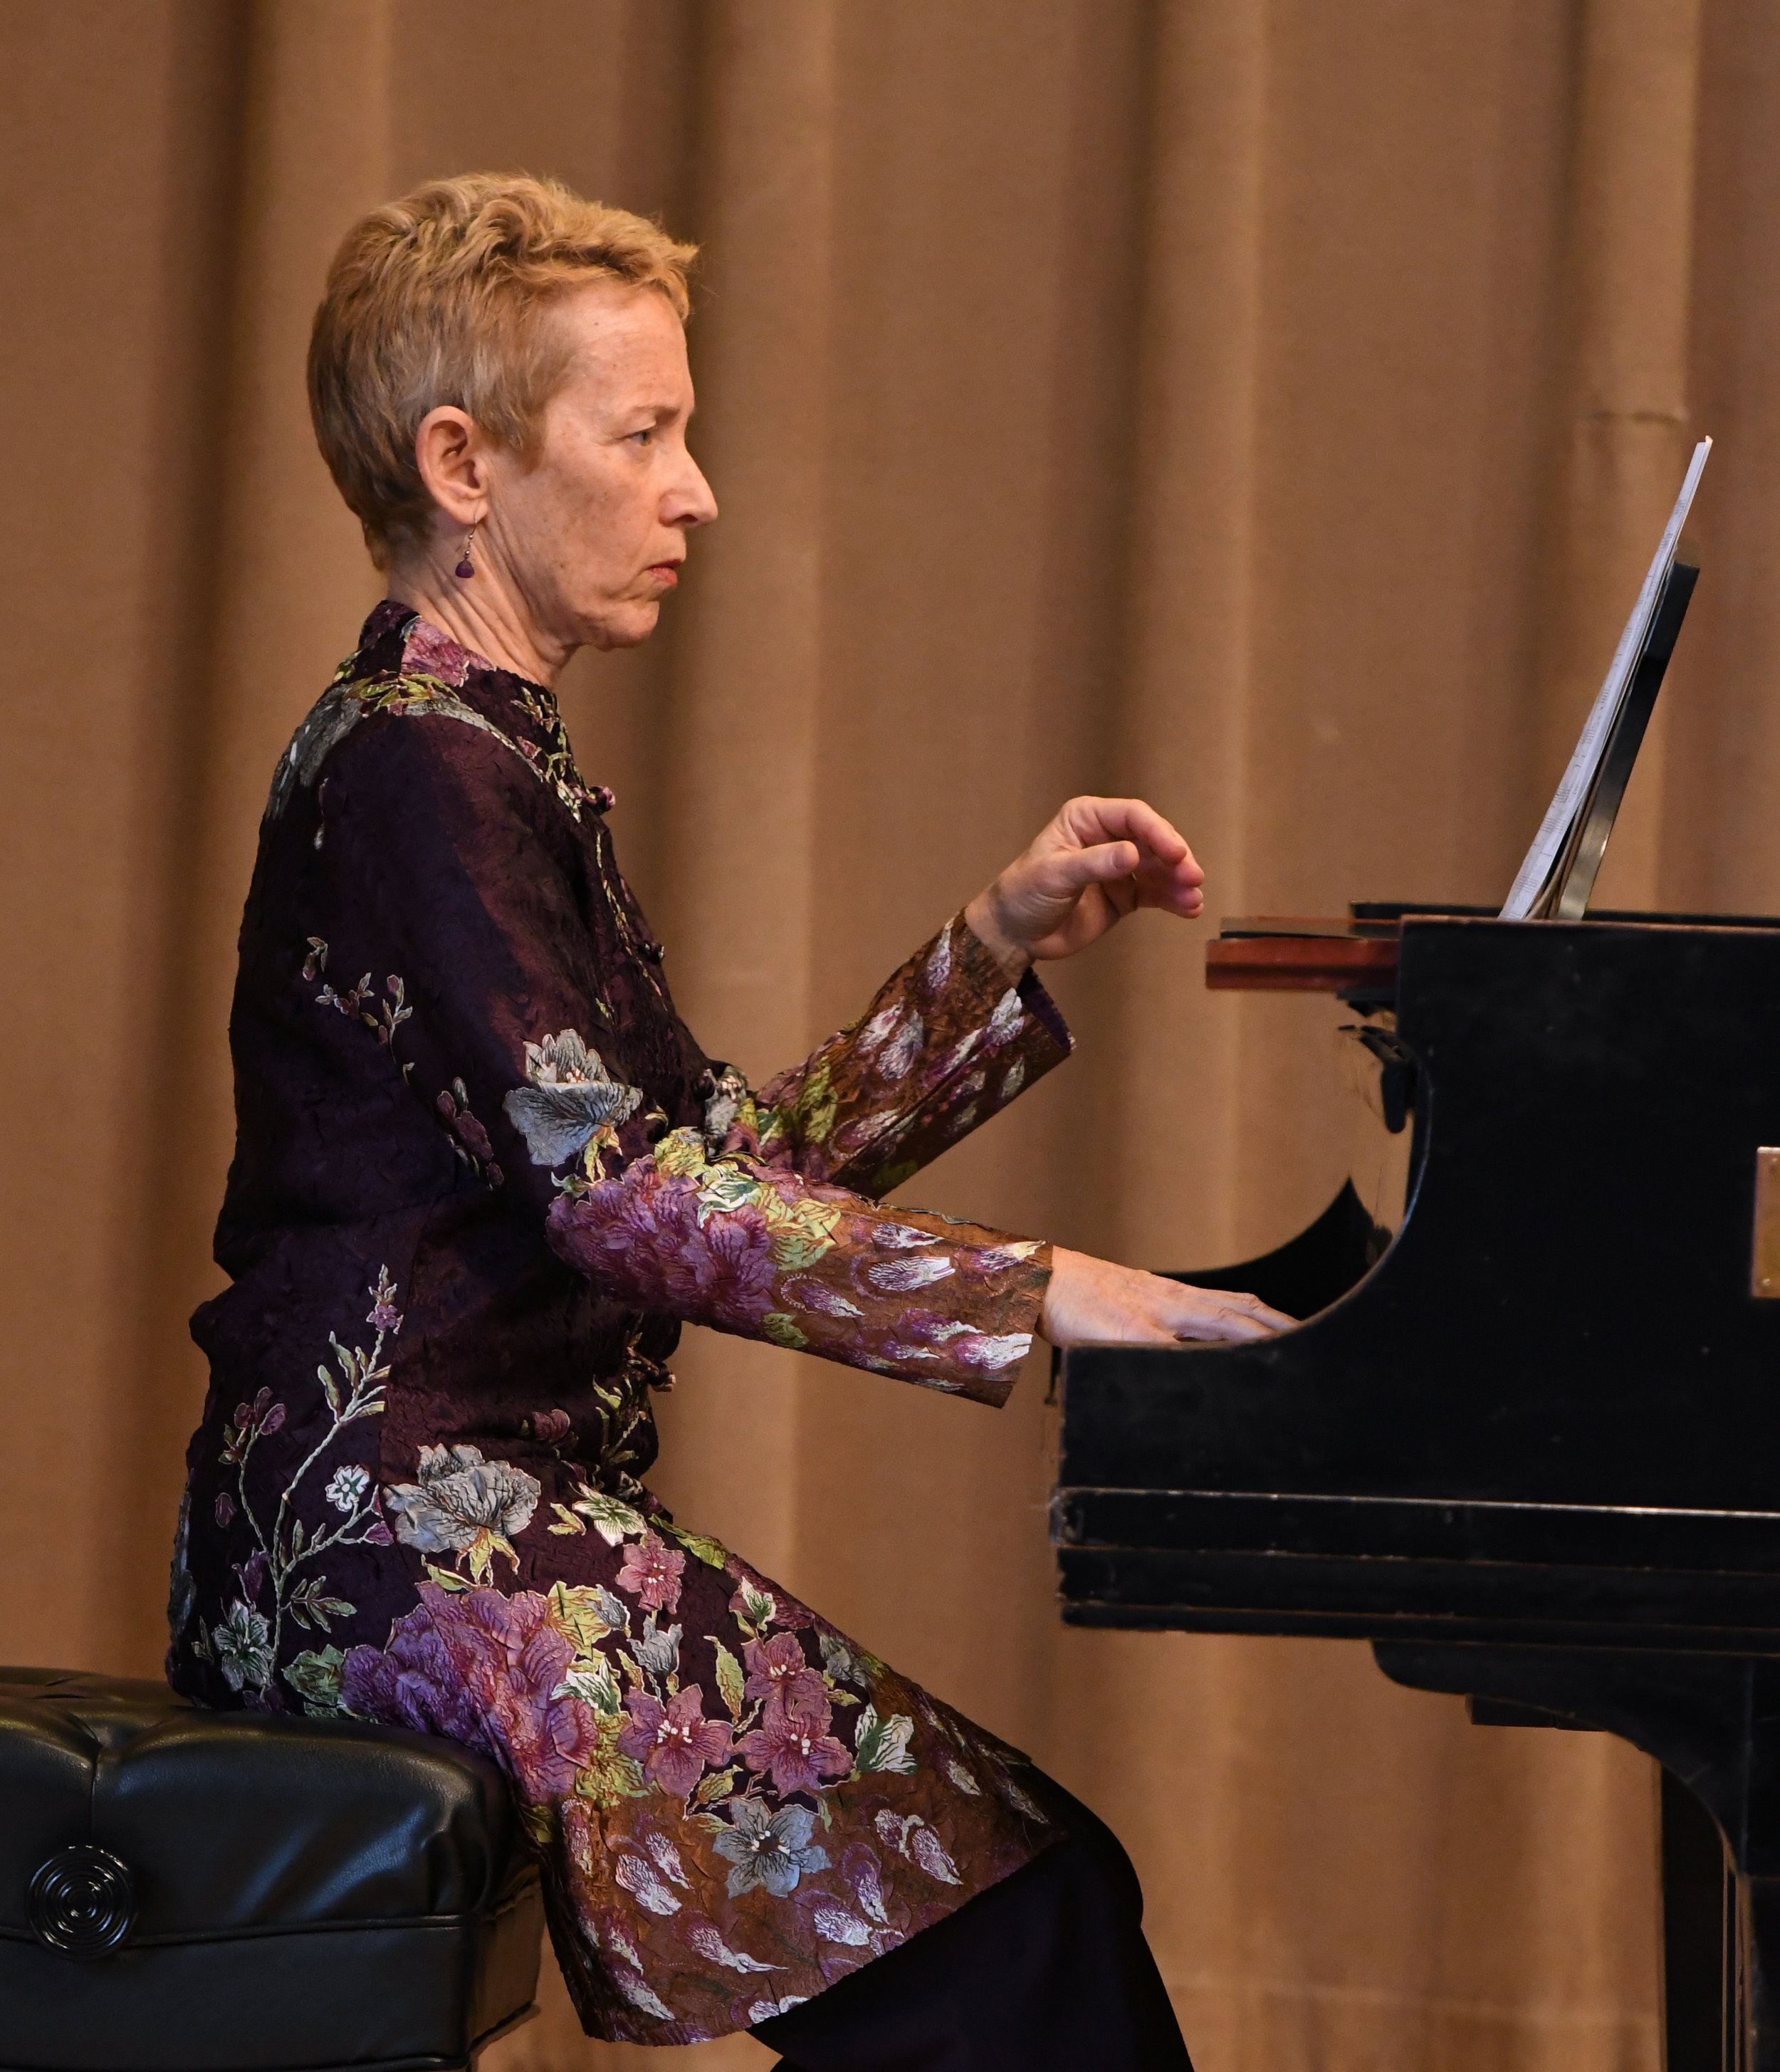  Linda Reichert performs “Nocturne” by John Harbison 